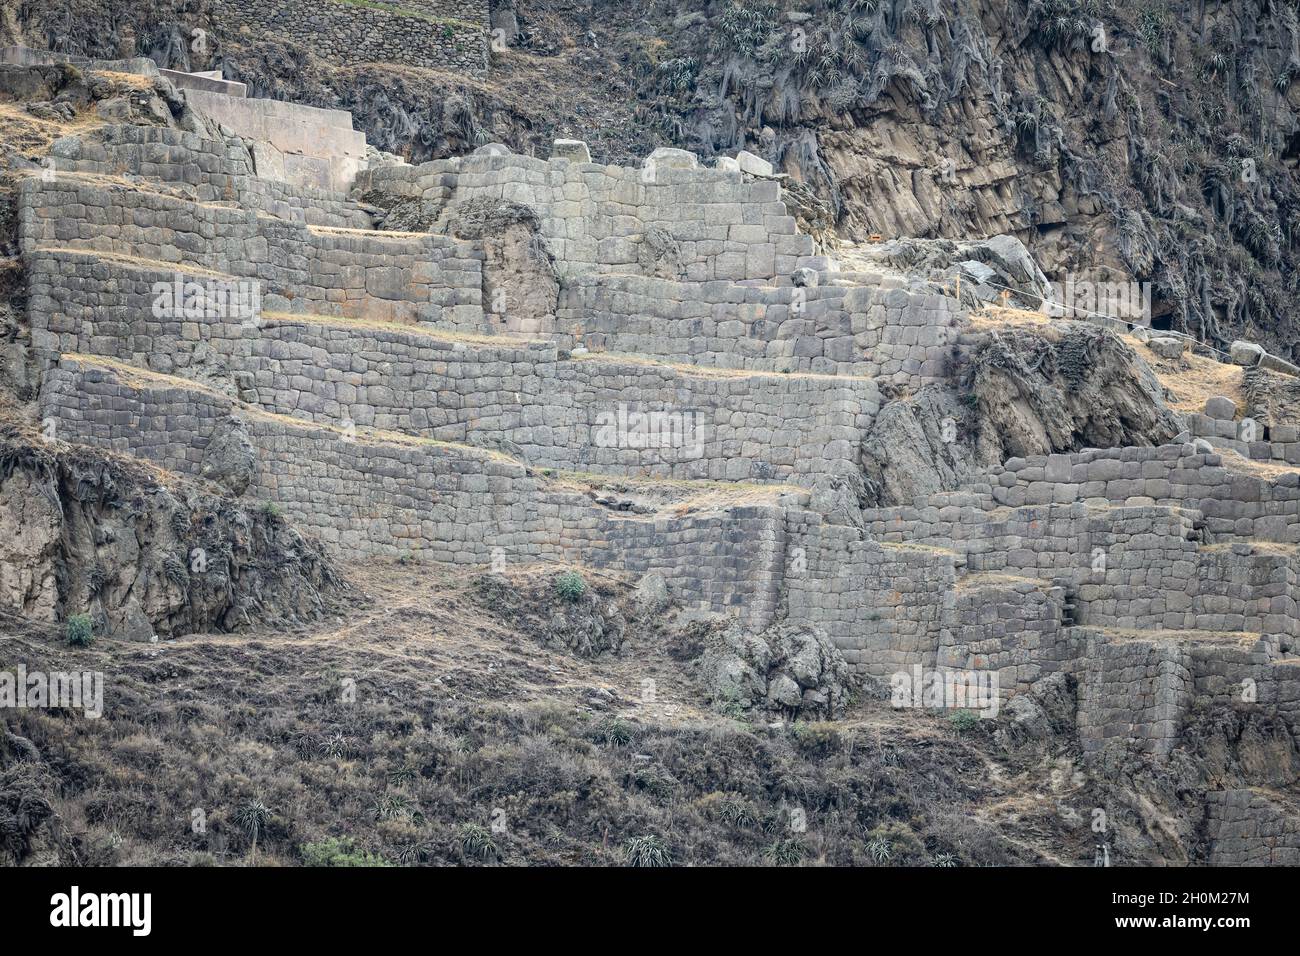 Stone walls of Inca ruin near Ollantaytambo, Cuzco, Peru. South America. Stock Photo